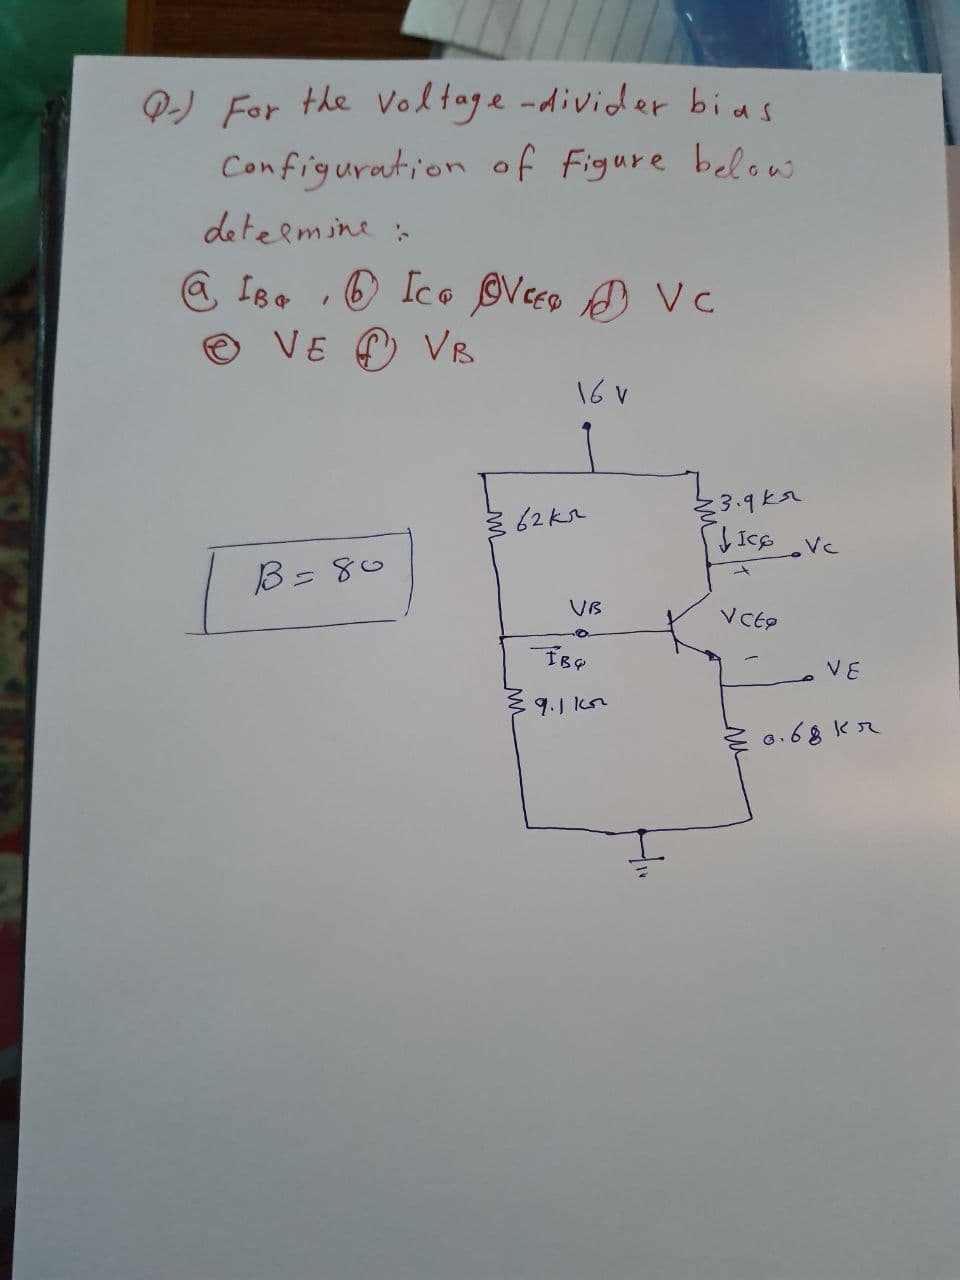 Q-) For the Voltage -divider bias
Configuration of Figure below
deteemine
@ IBe O Ico Veco A Vc
O VE C) VR
16 v
3.9ka
B=80
UB
VE
9.1 Icn
E 0.68 kr
